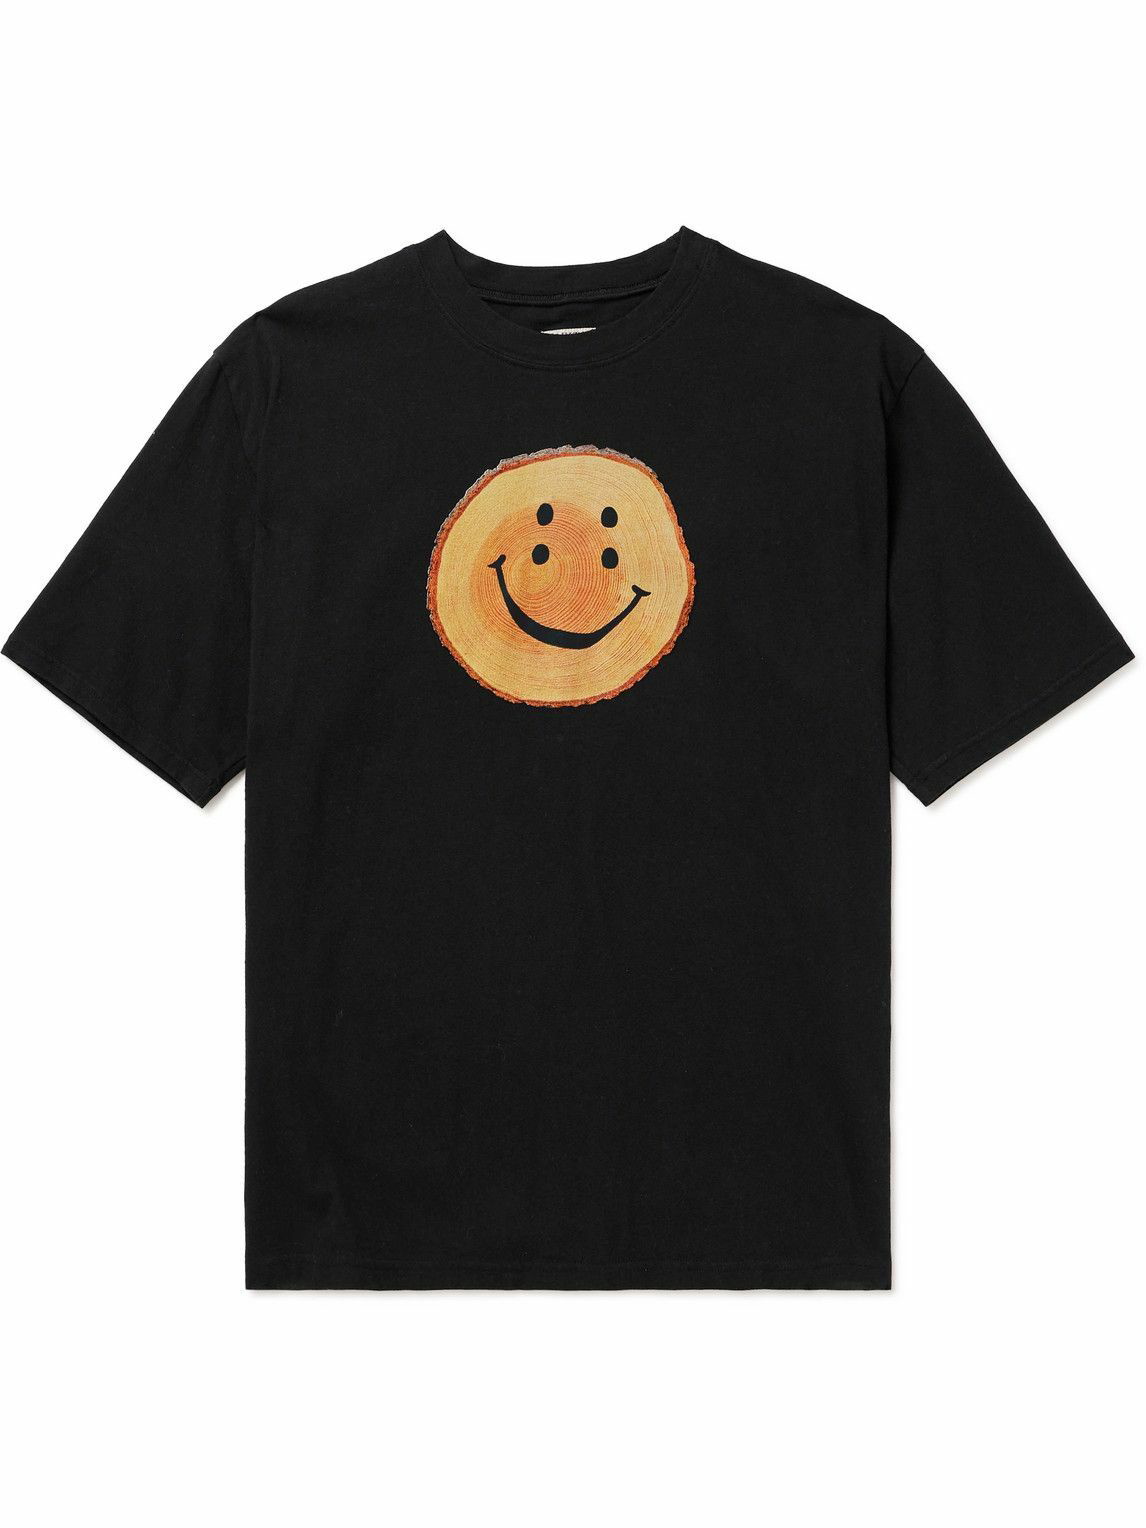 KAPITAL - Printed Cotton-Jersey T-Shirt - Black KAPITAL